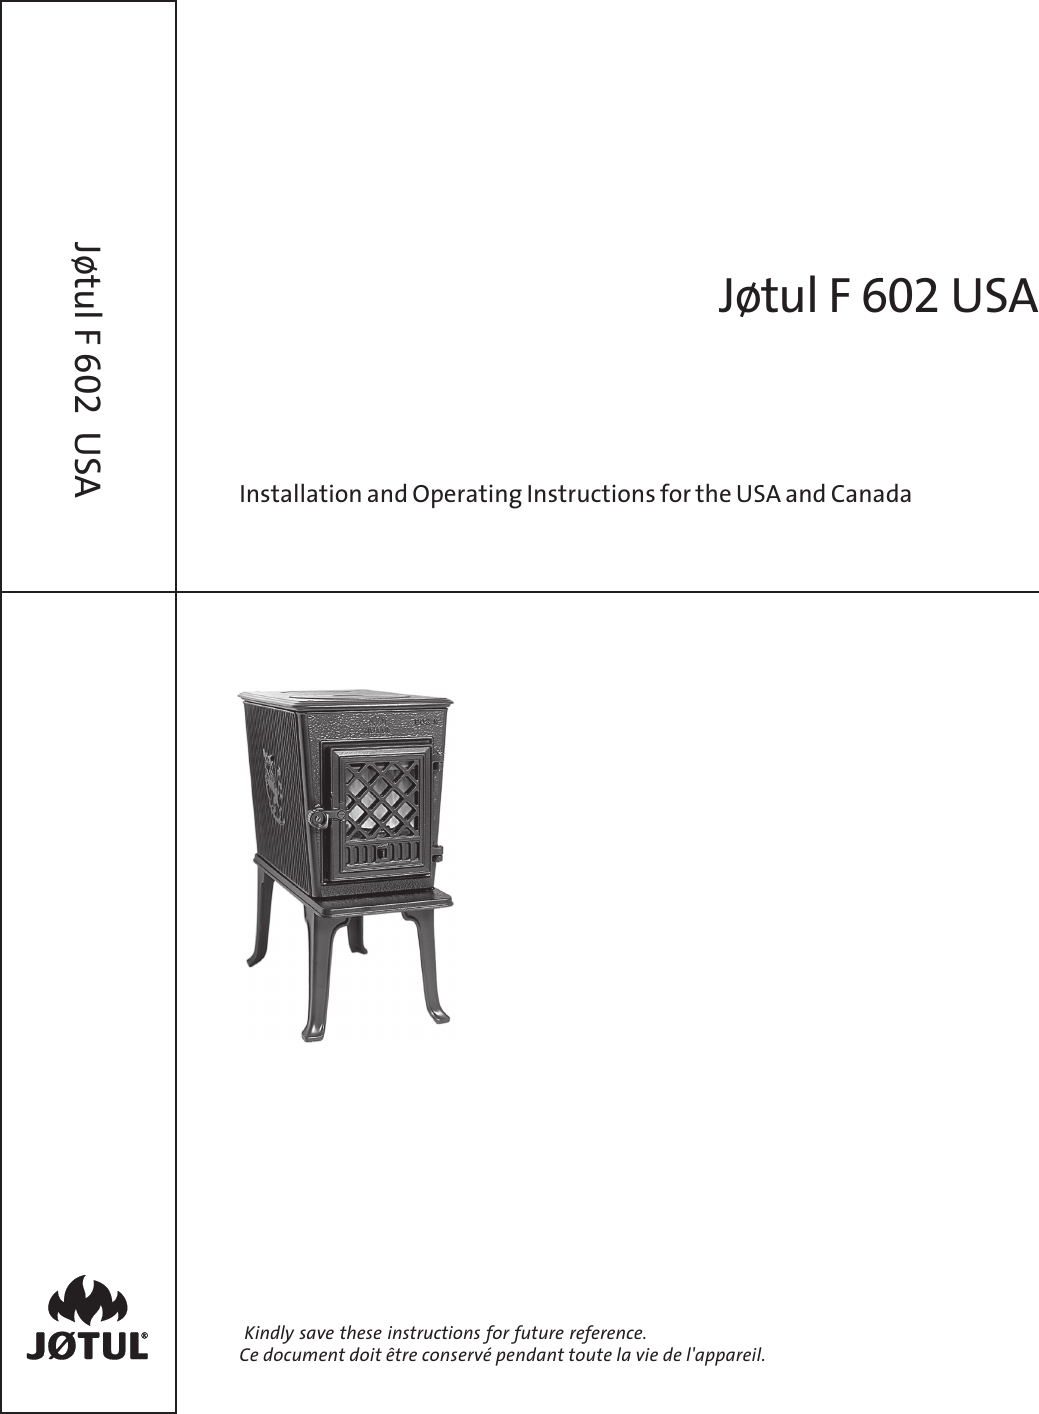 Jotul Wood Stove Users Manual Jøtul F 602 USA 2